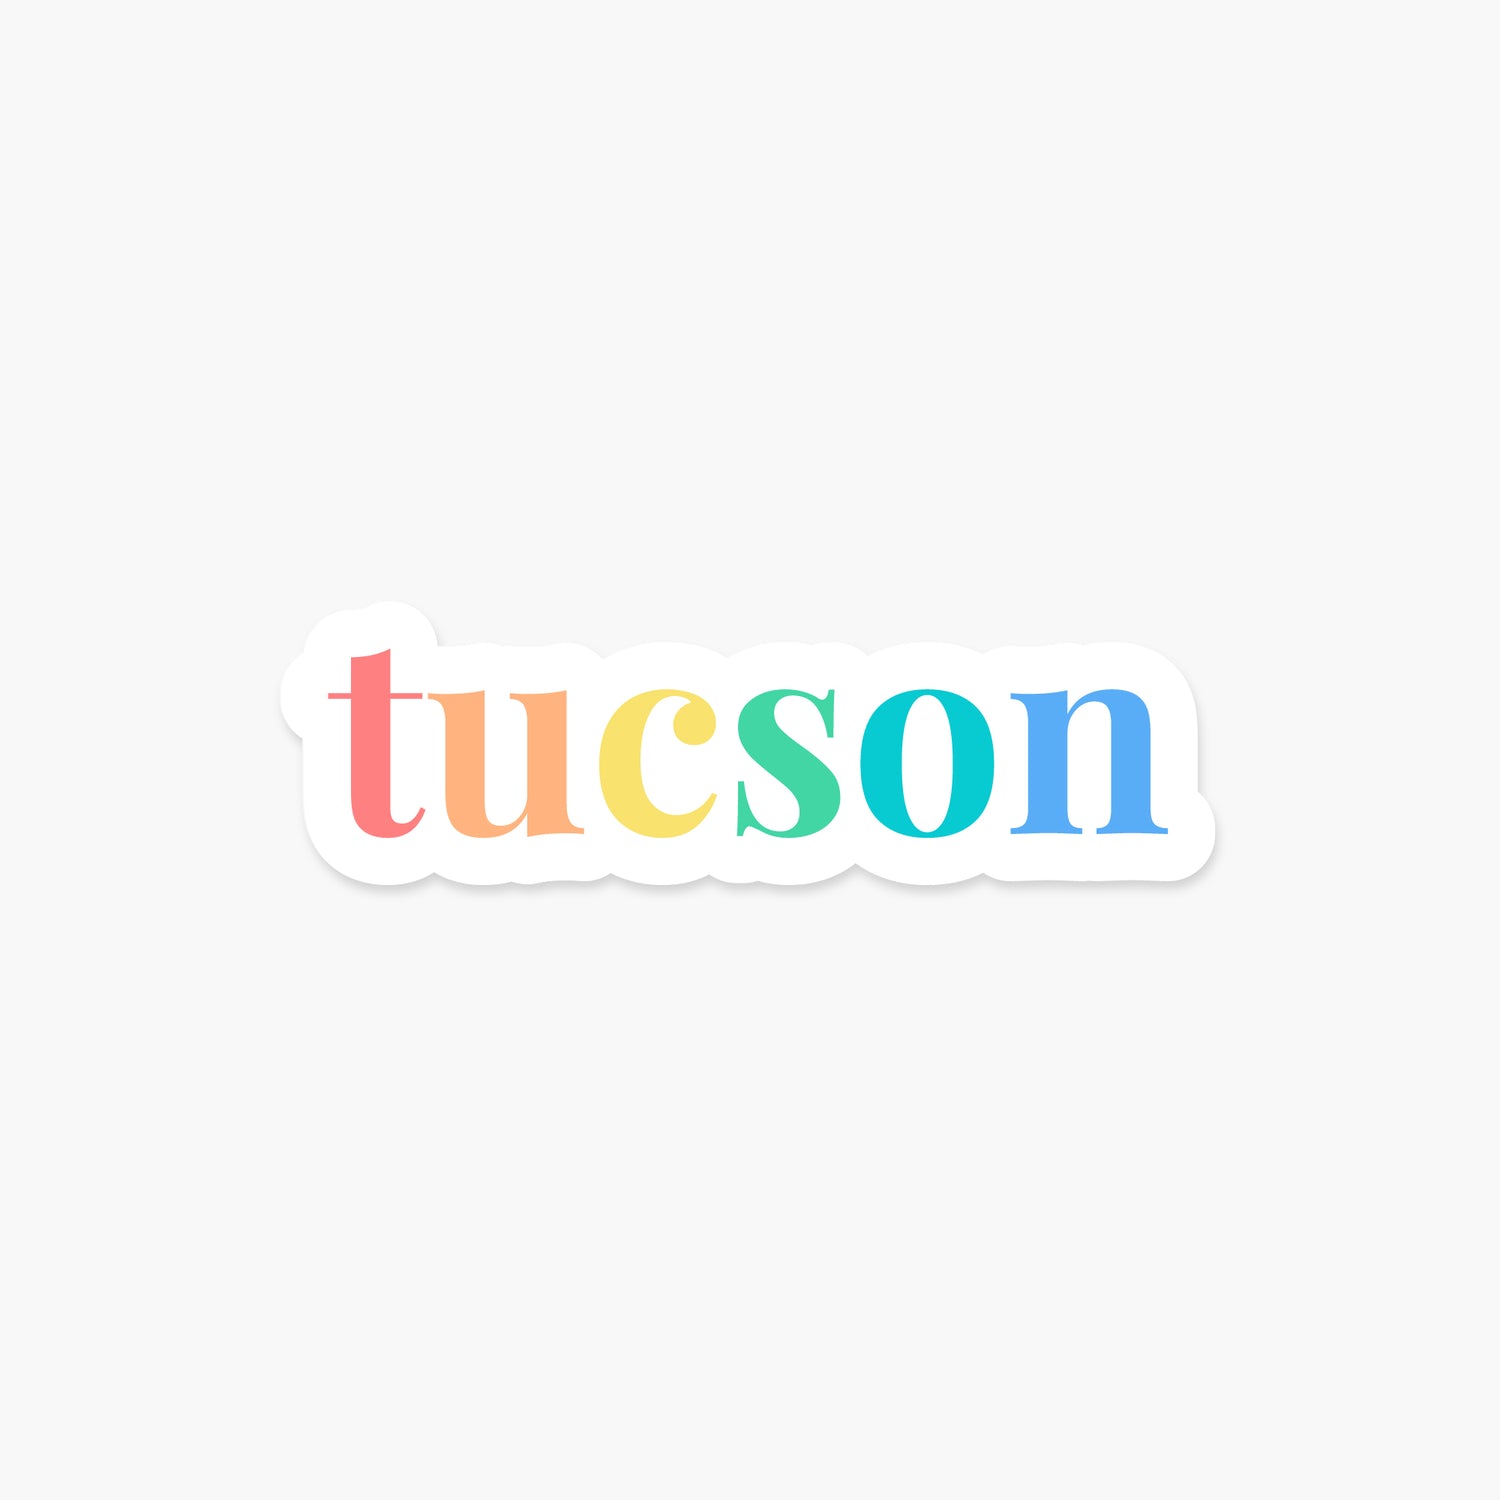 Tucson, Arizona - Everyday Sticker | Footnotes Paper